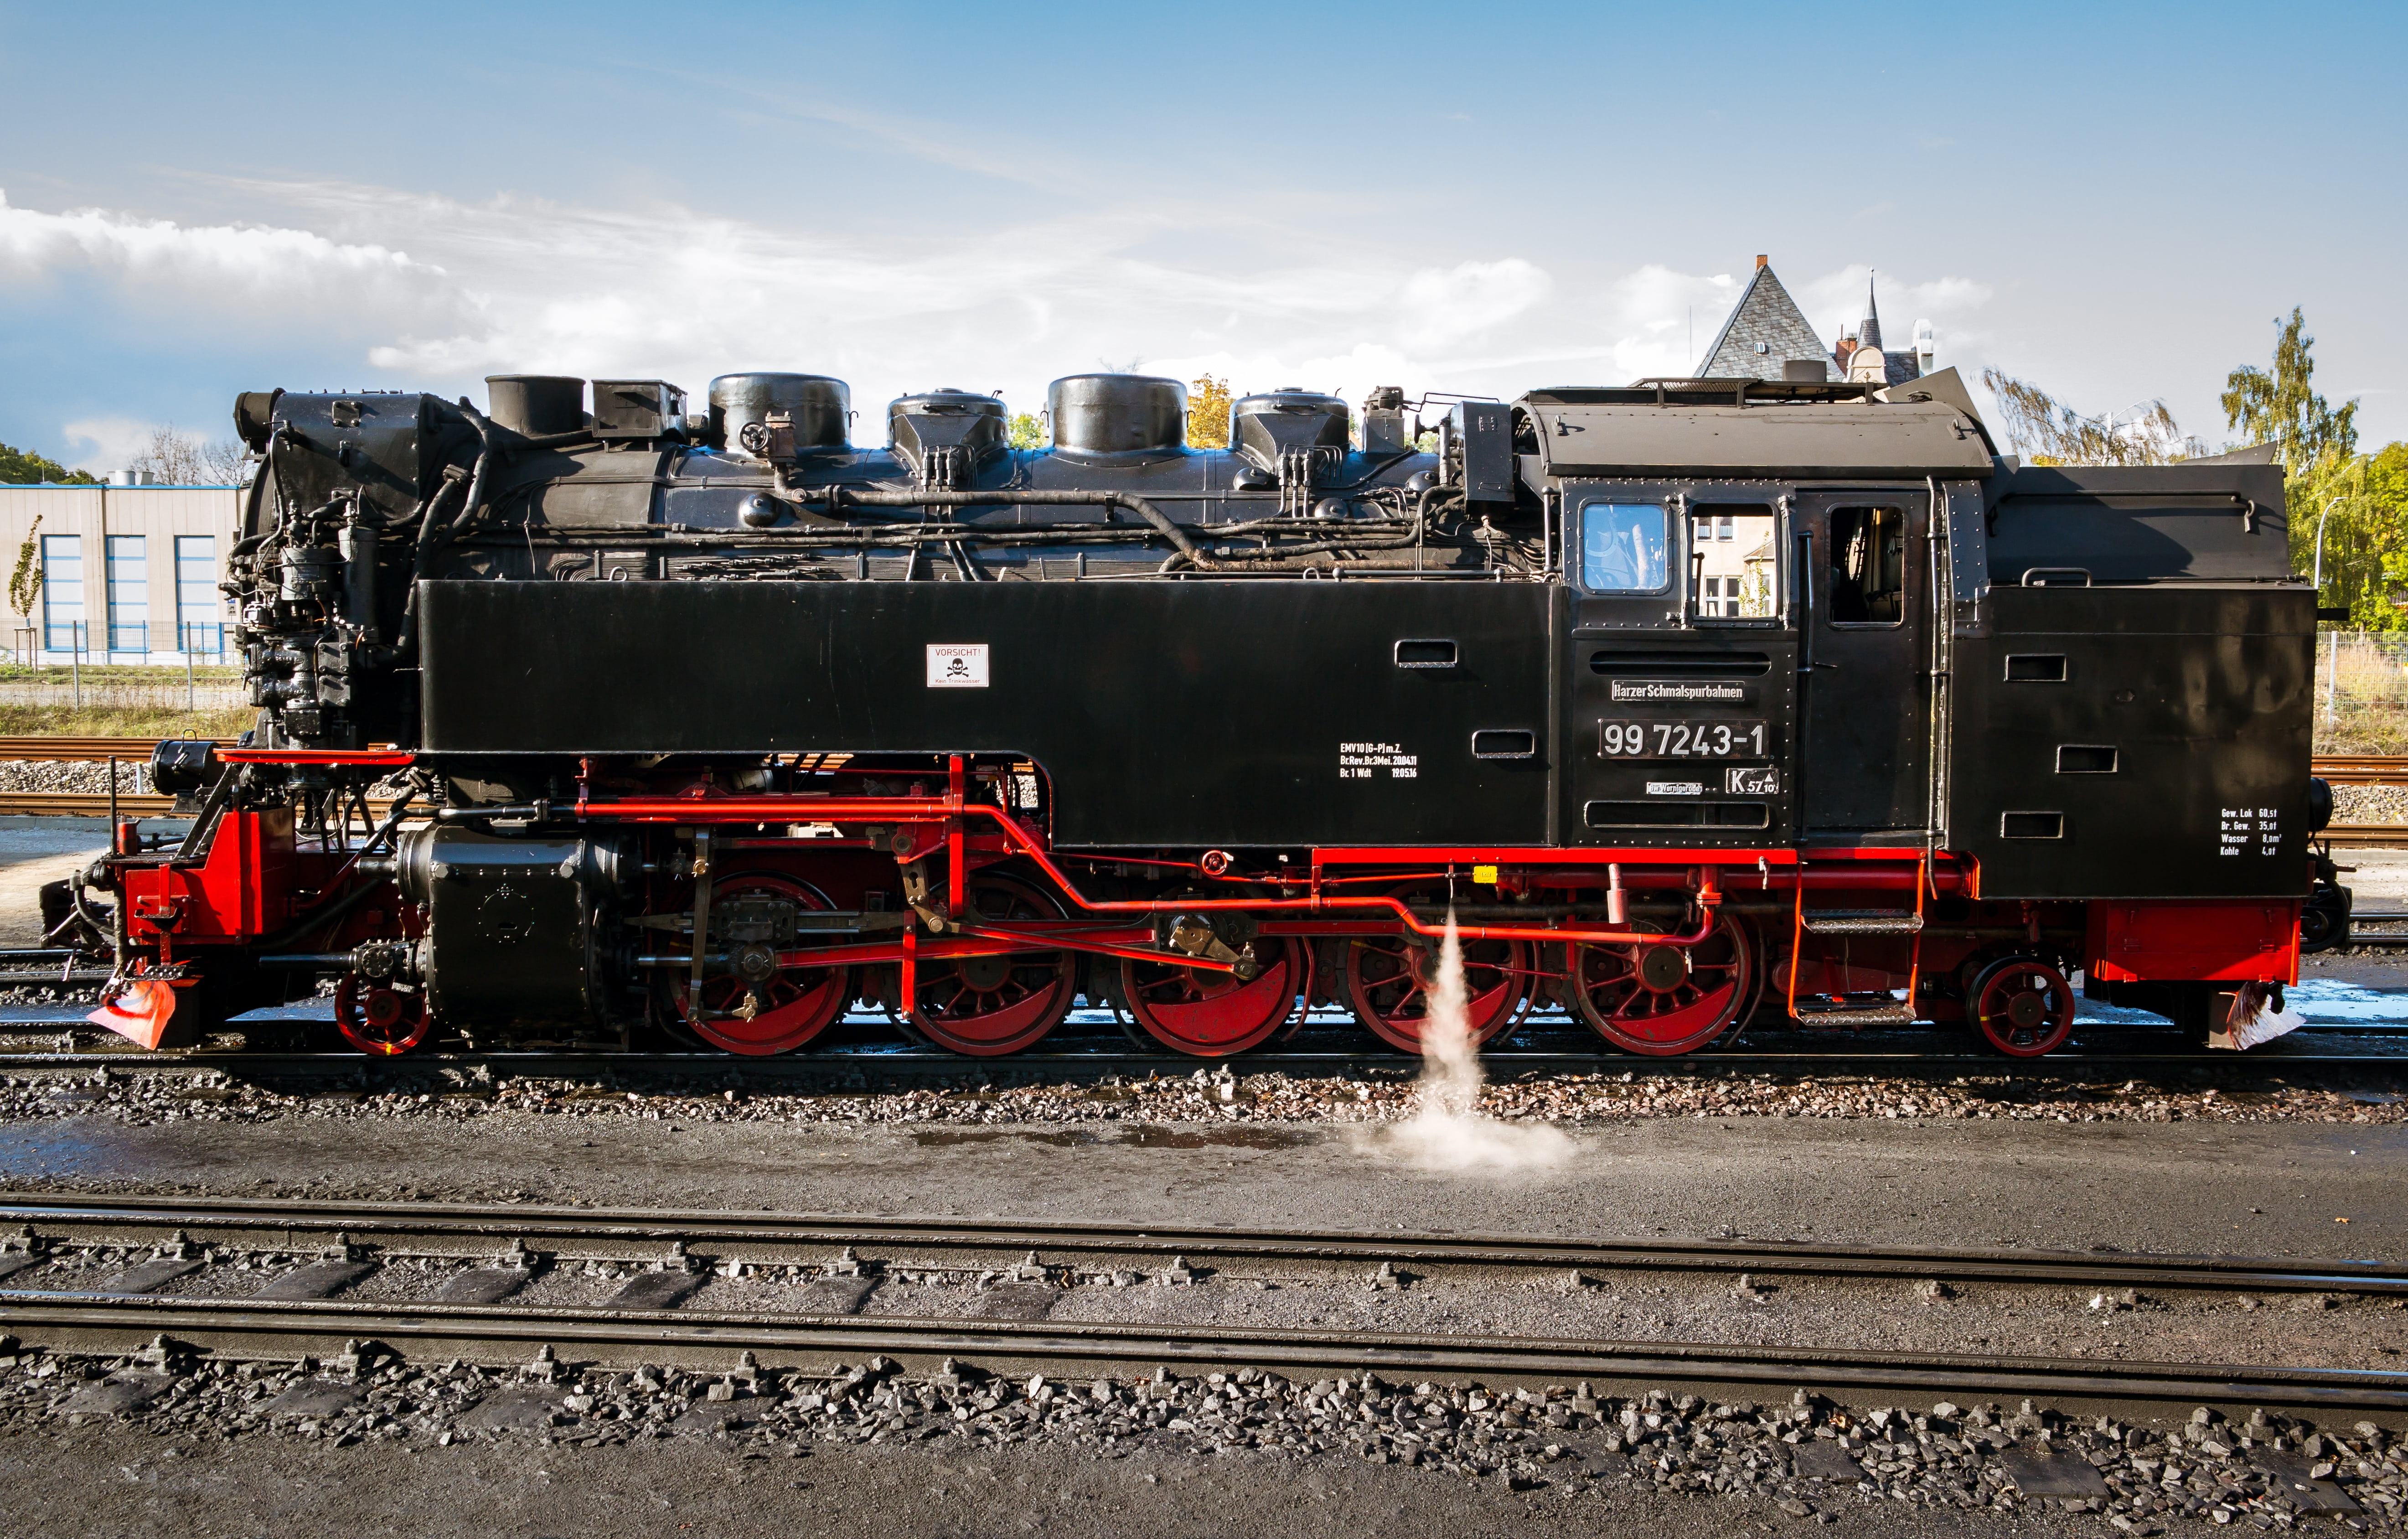 train on railway, locomotive, steam locomotive, historically